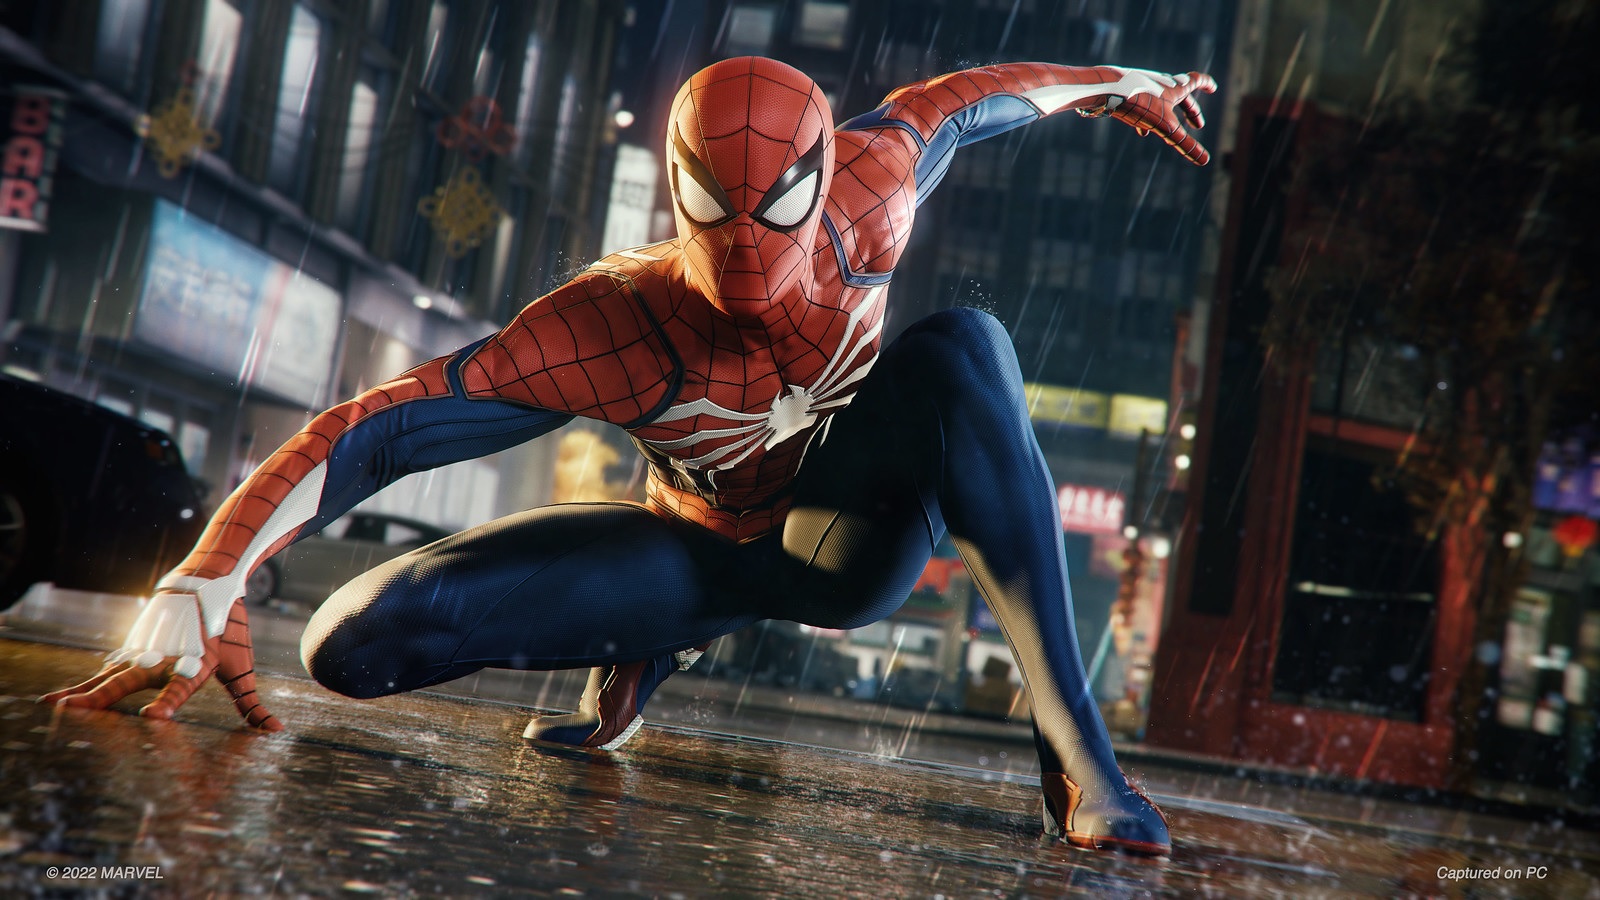 Microsoft The Amazing Spider-Man Games